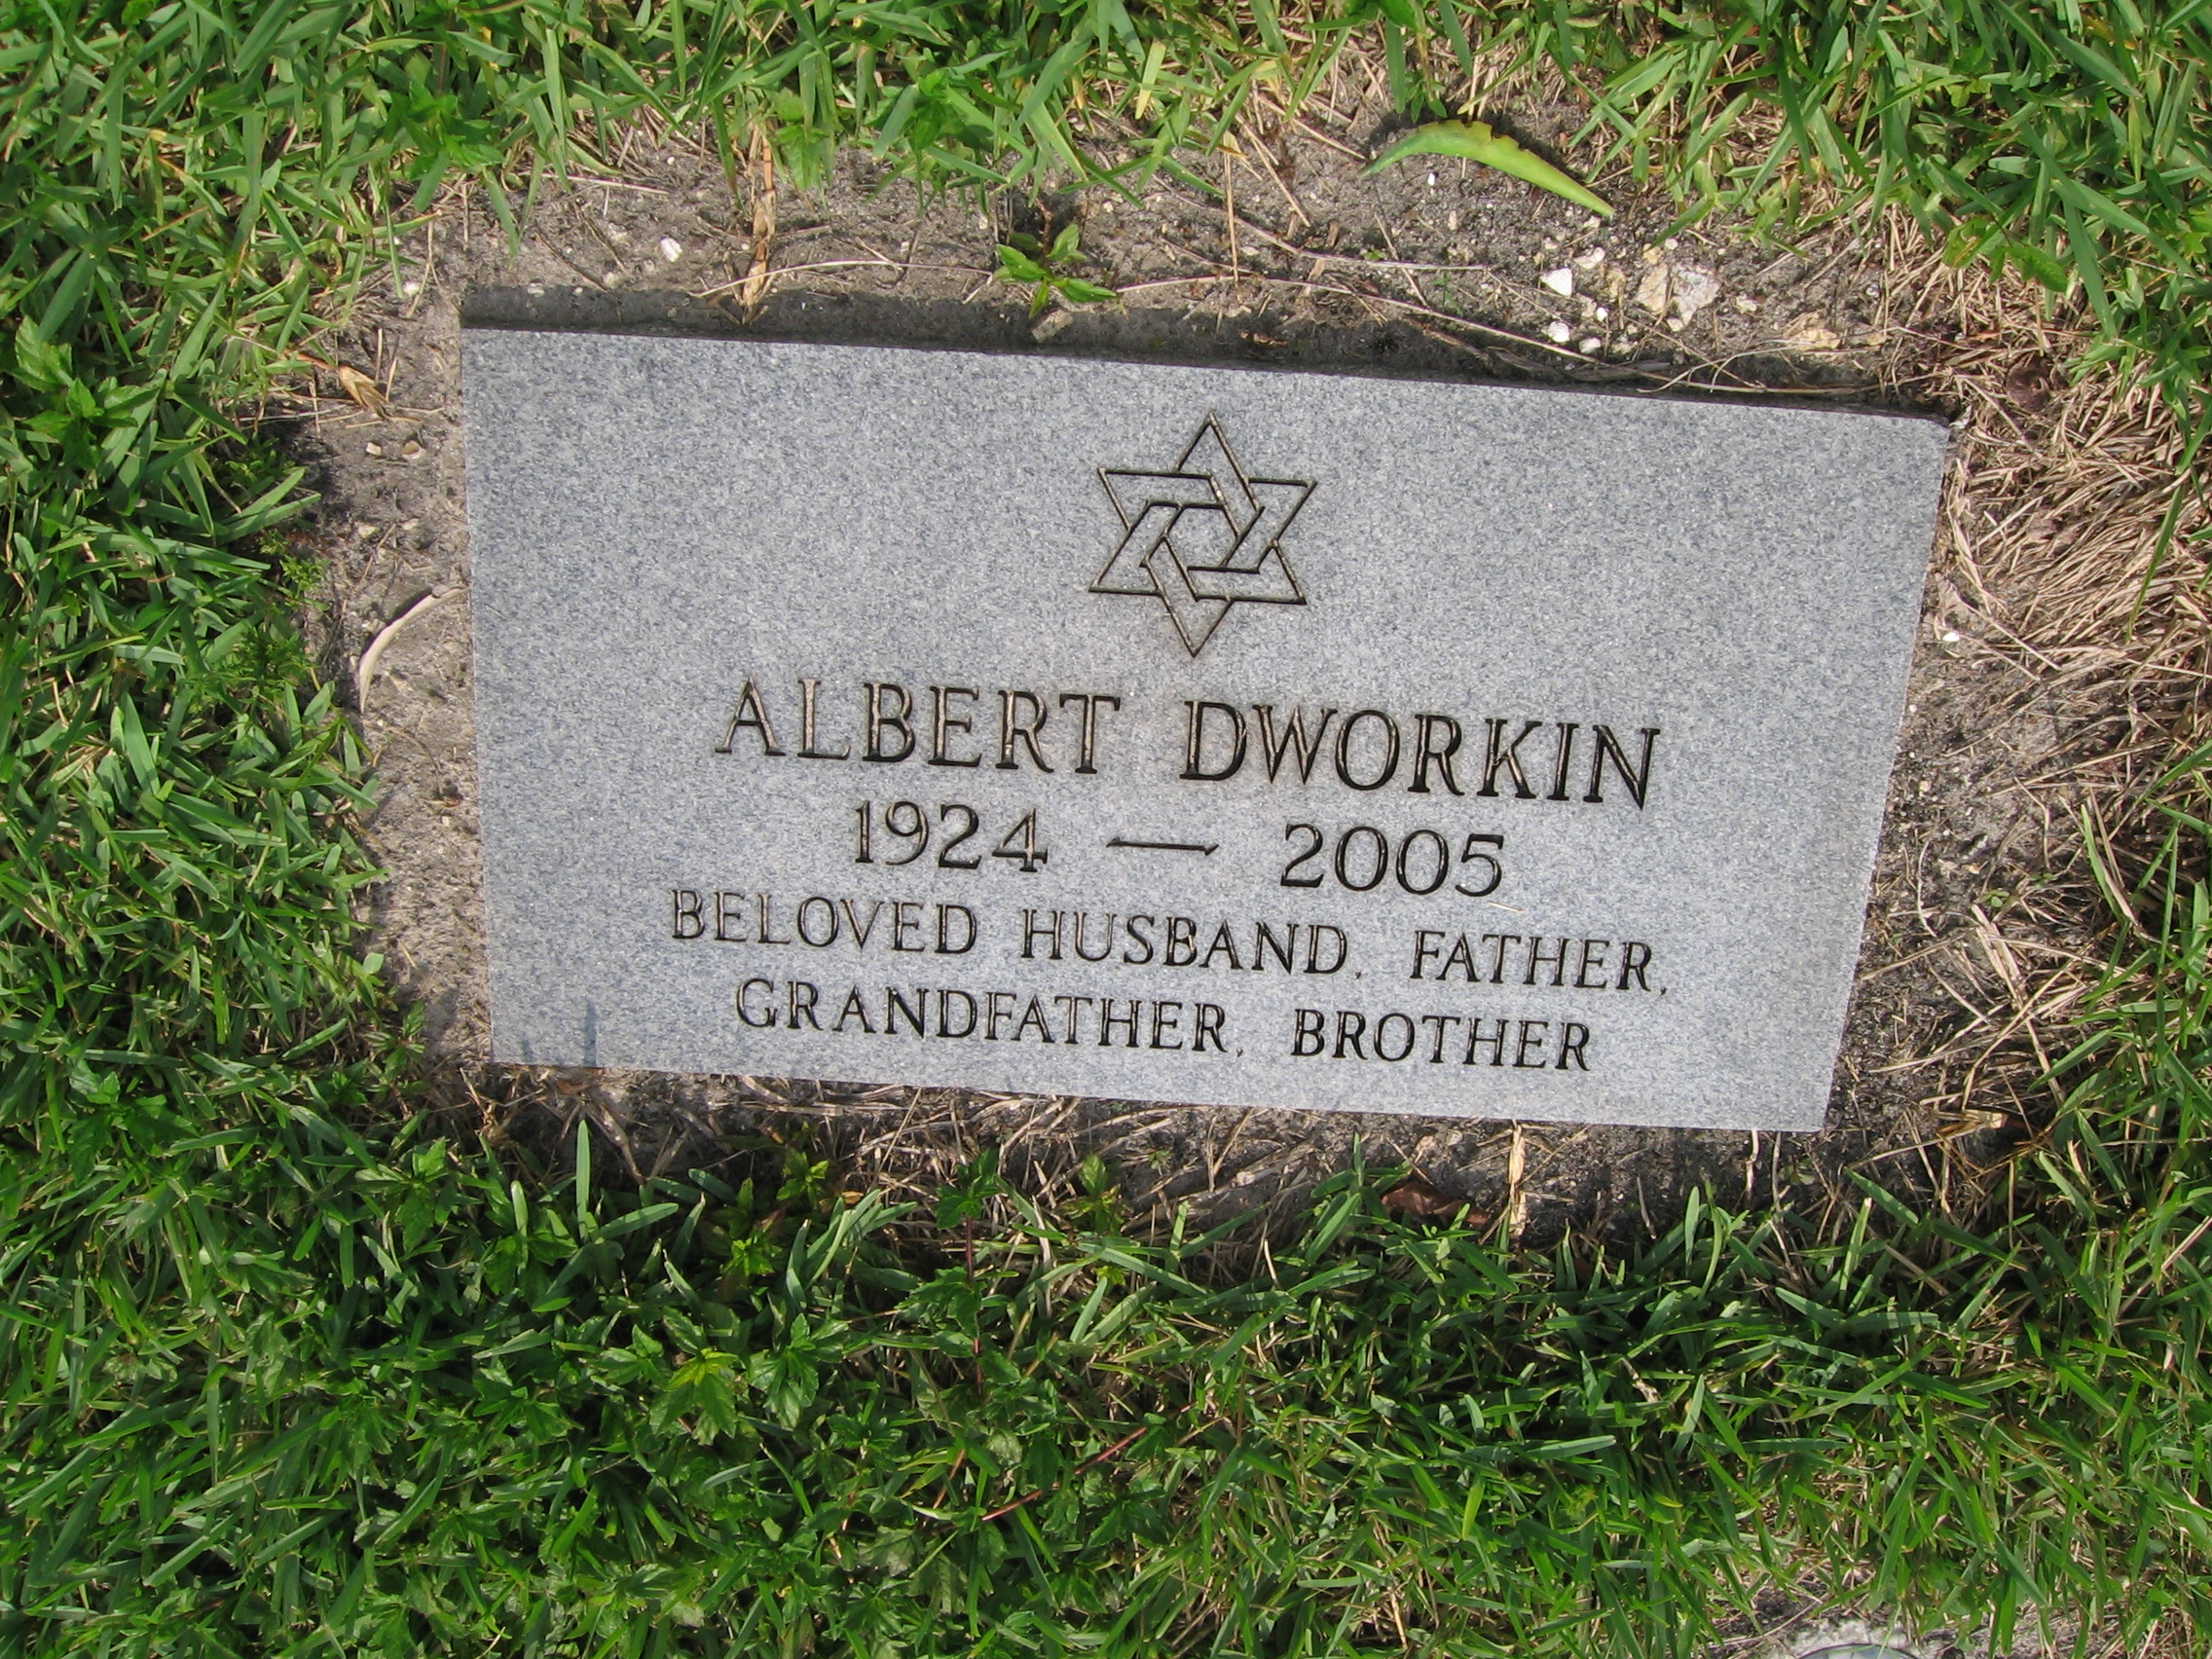 Albert Dworkin